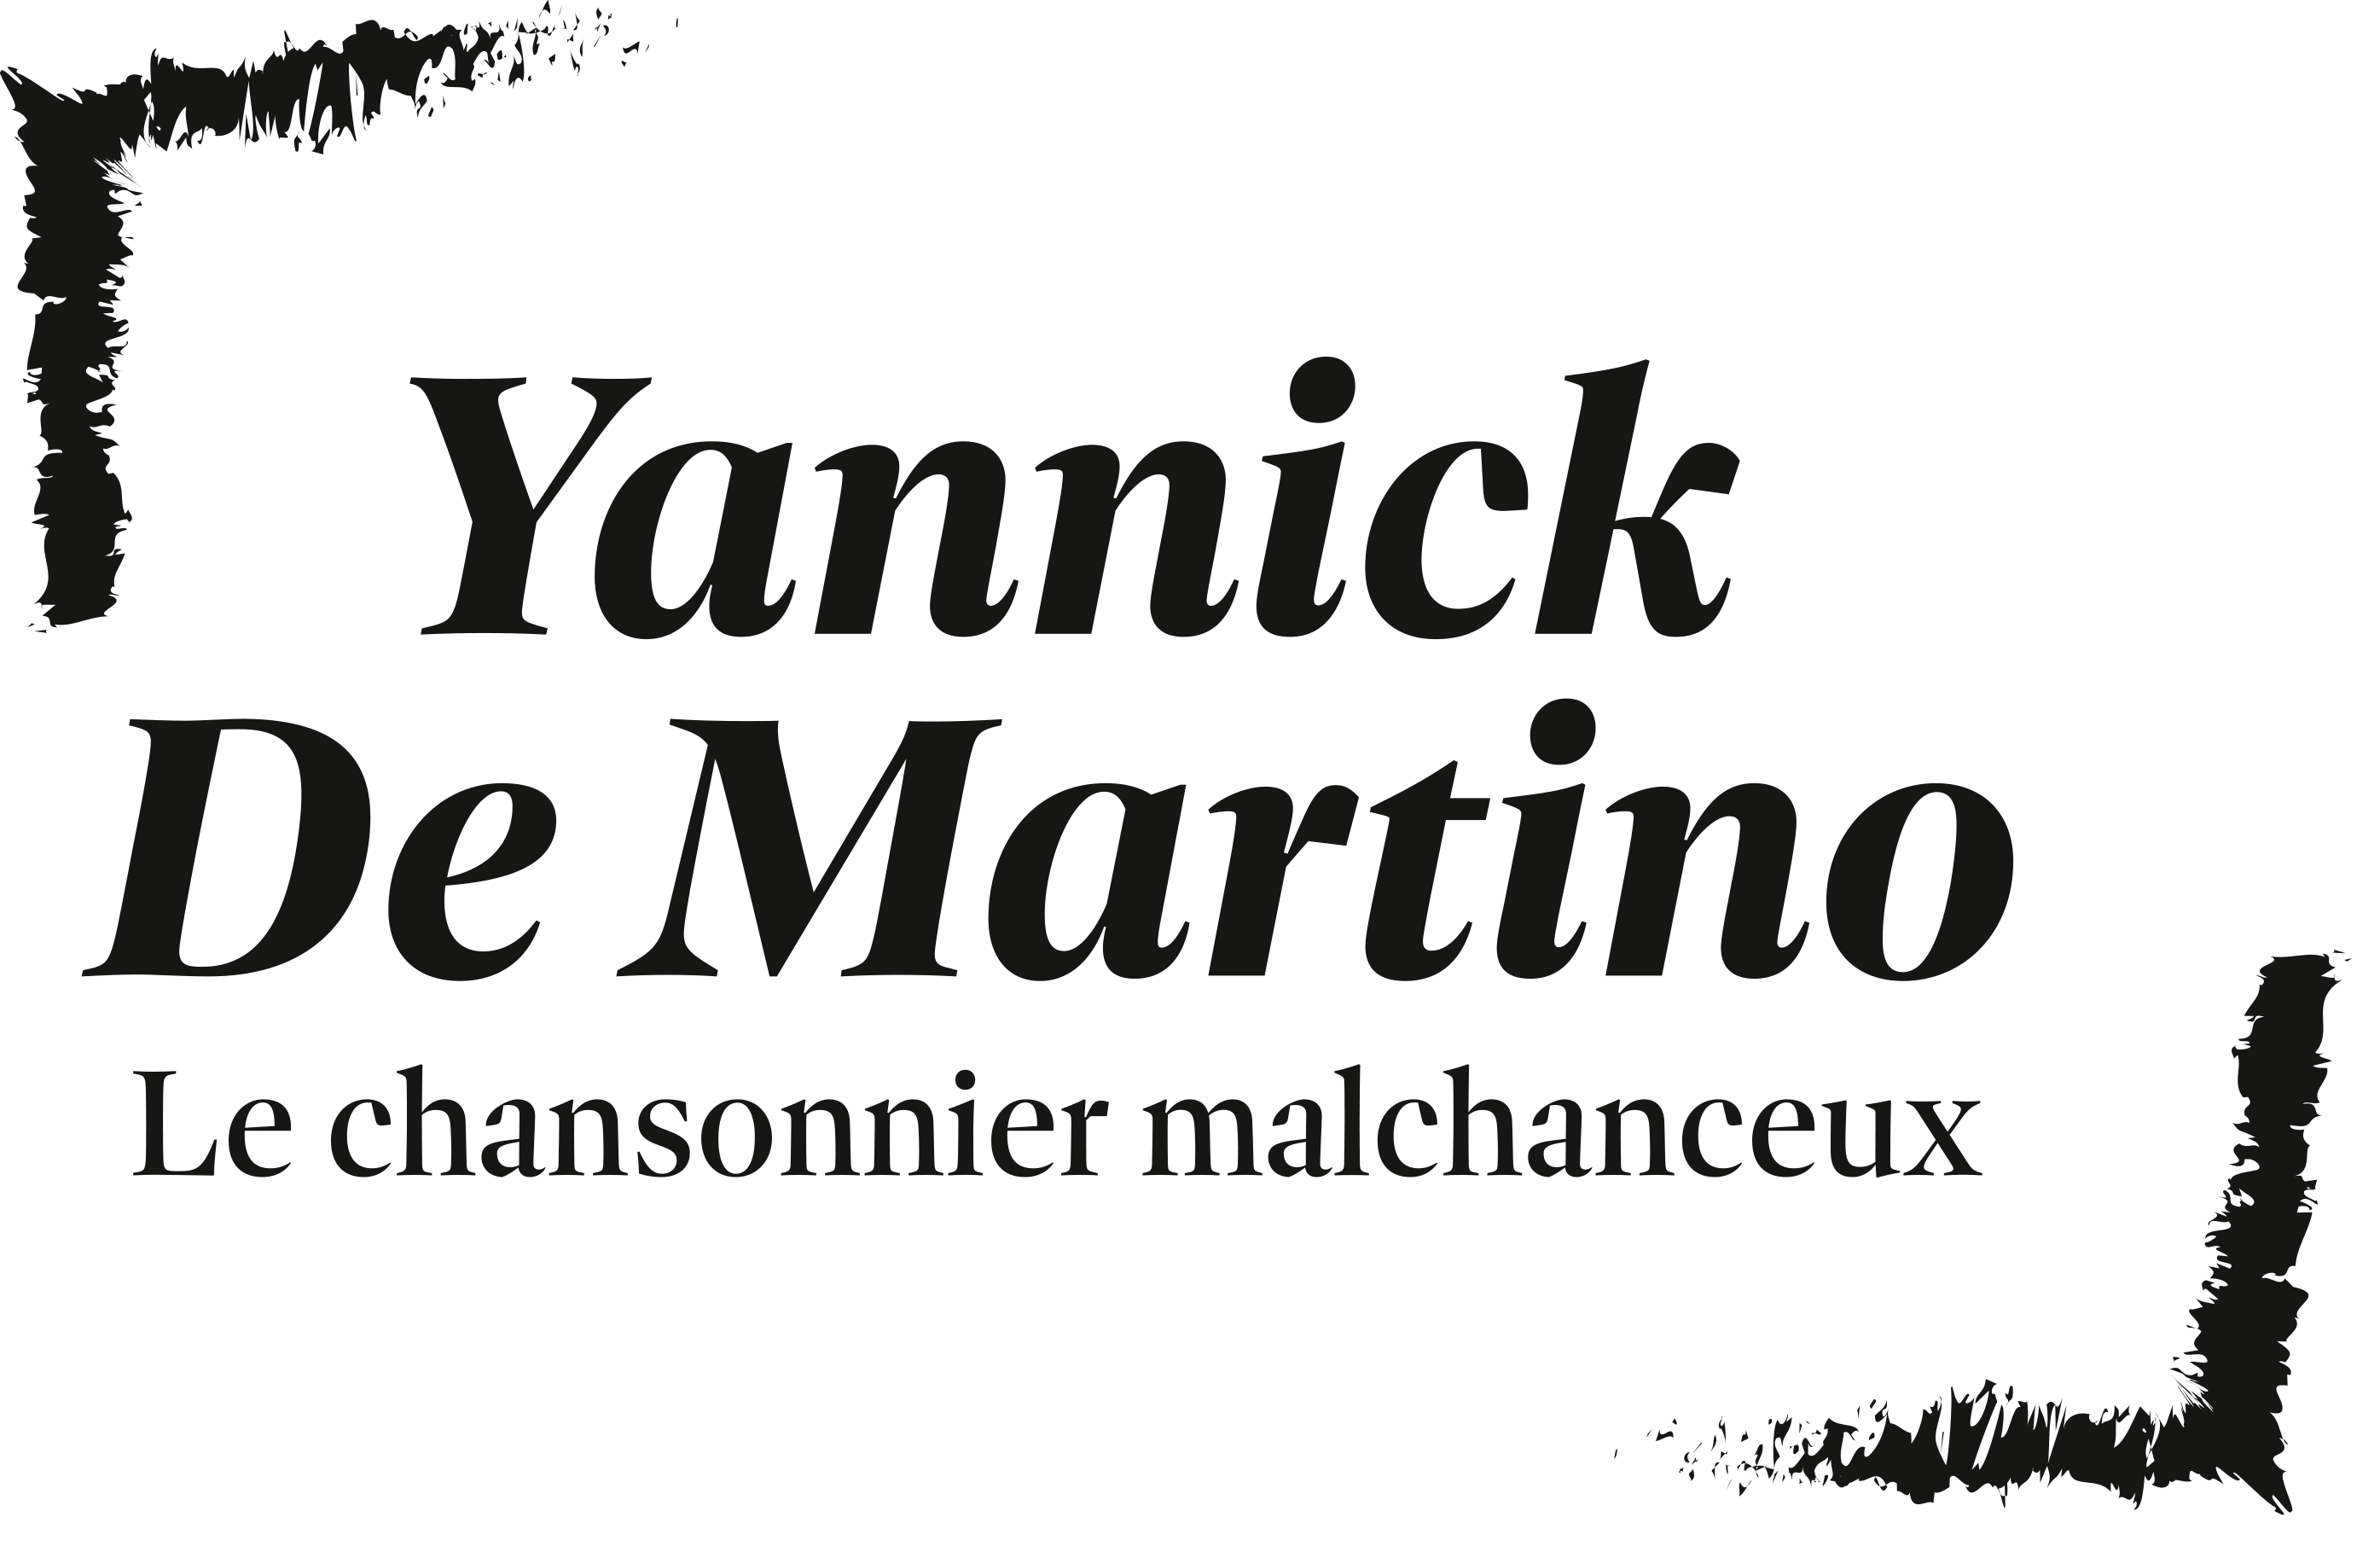 Yannick De Martino : le chansonnier malchanceux